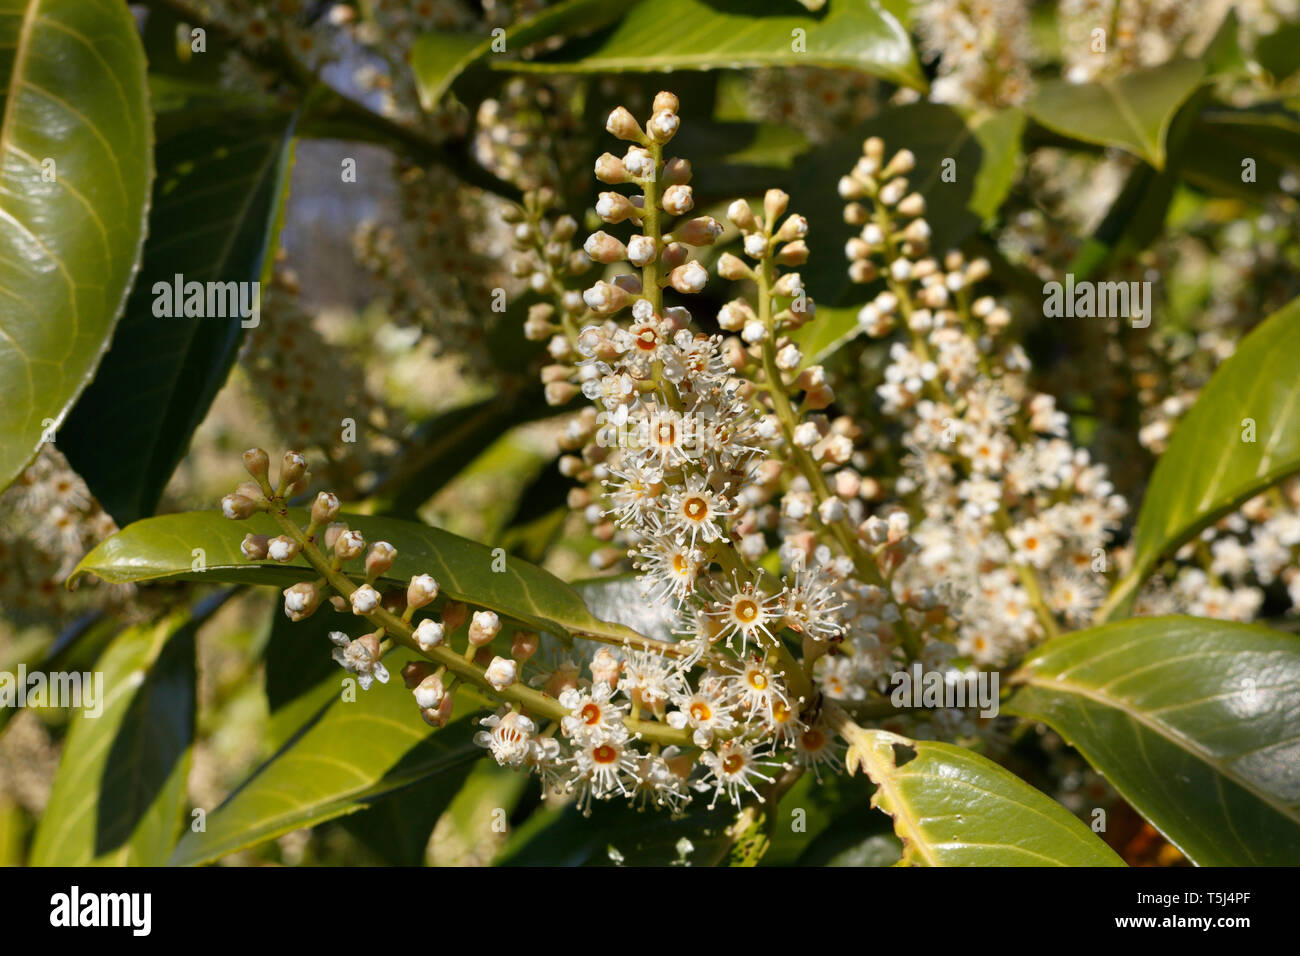 Flowers of the Evergreen Portugese Laurel tree - Prunus Lusitanica Portugal laurel Stock Photo